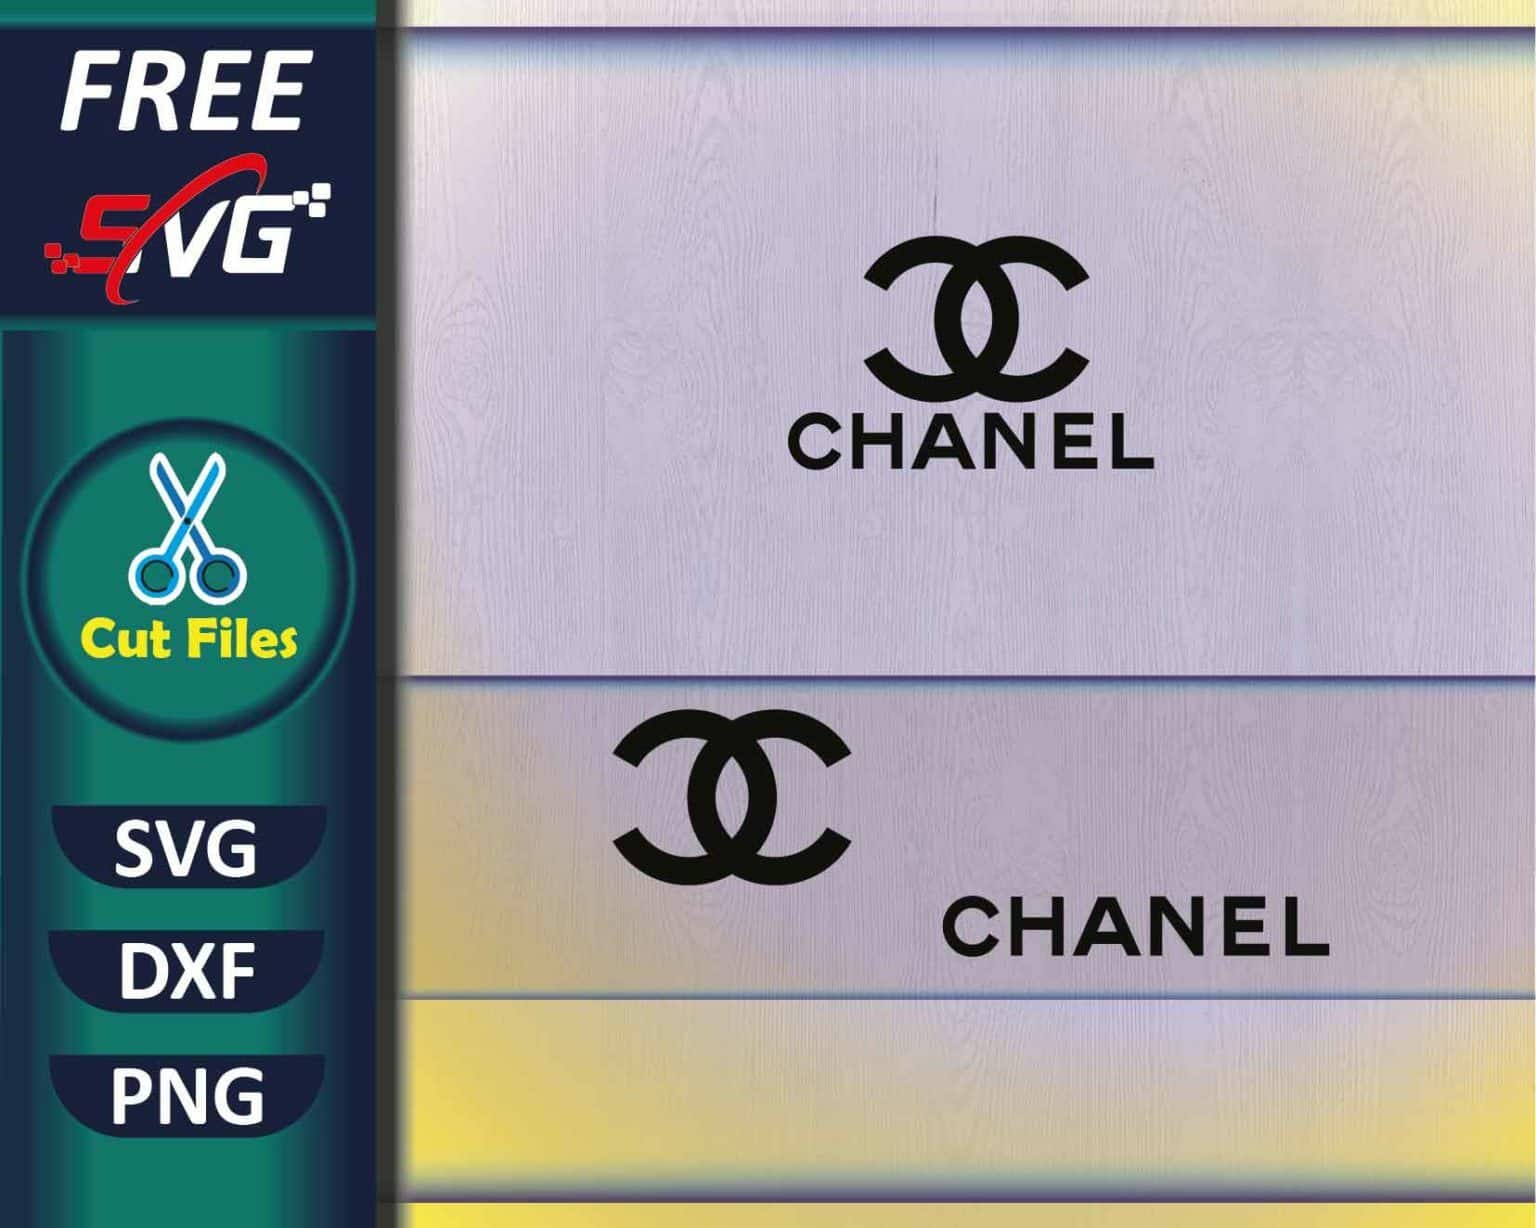 Chanel Logo SVG Free | Free SVG files